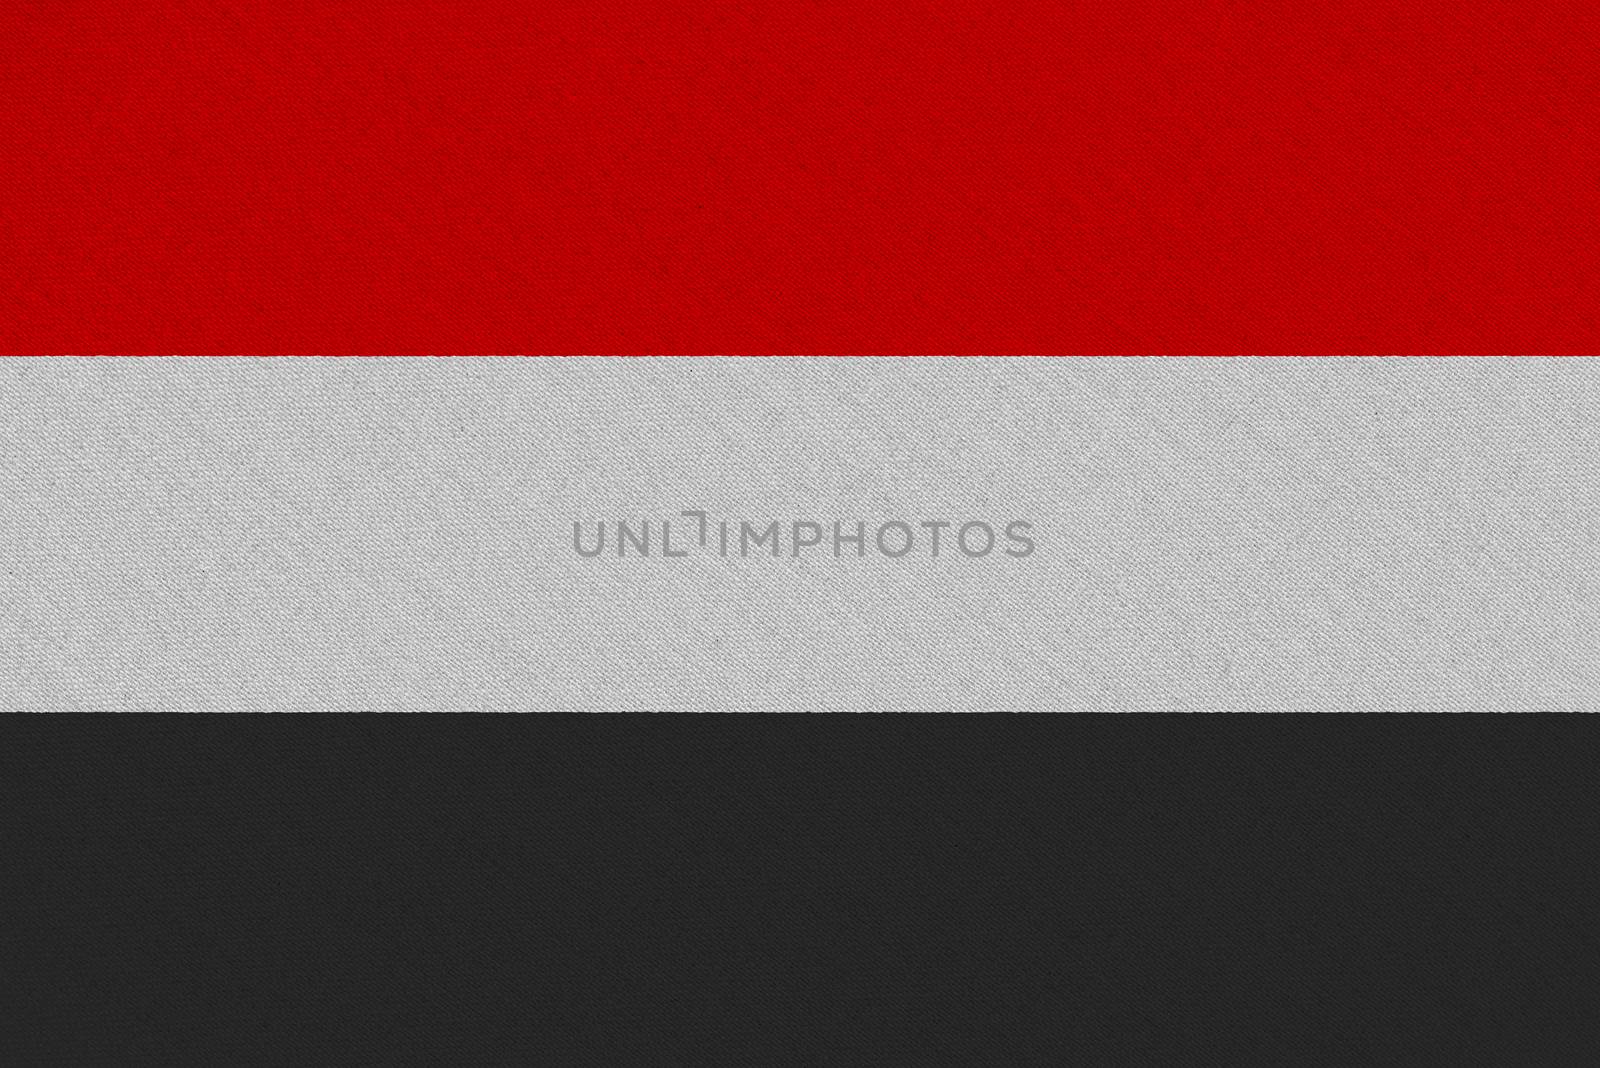 Yemen fabric flag. Patriotic background. National flag of Yemen